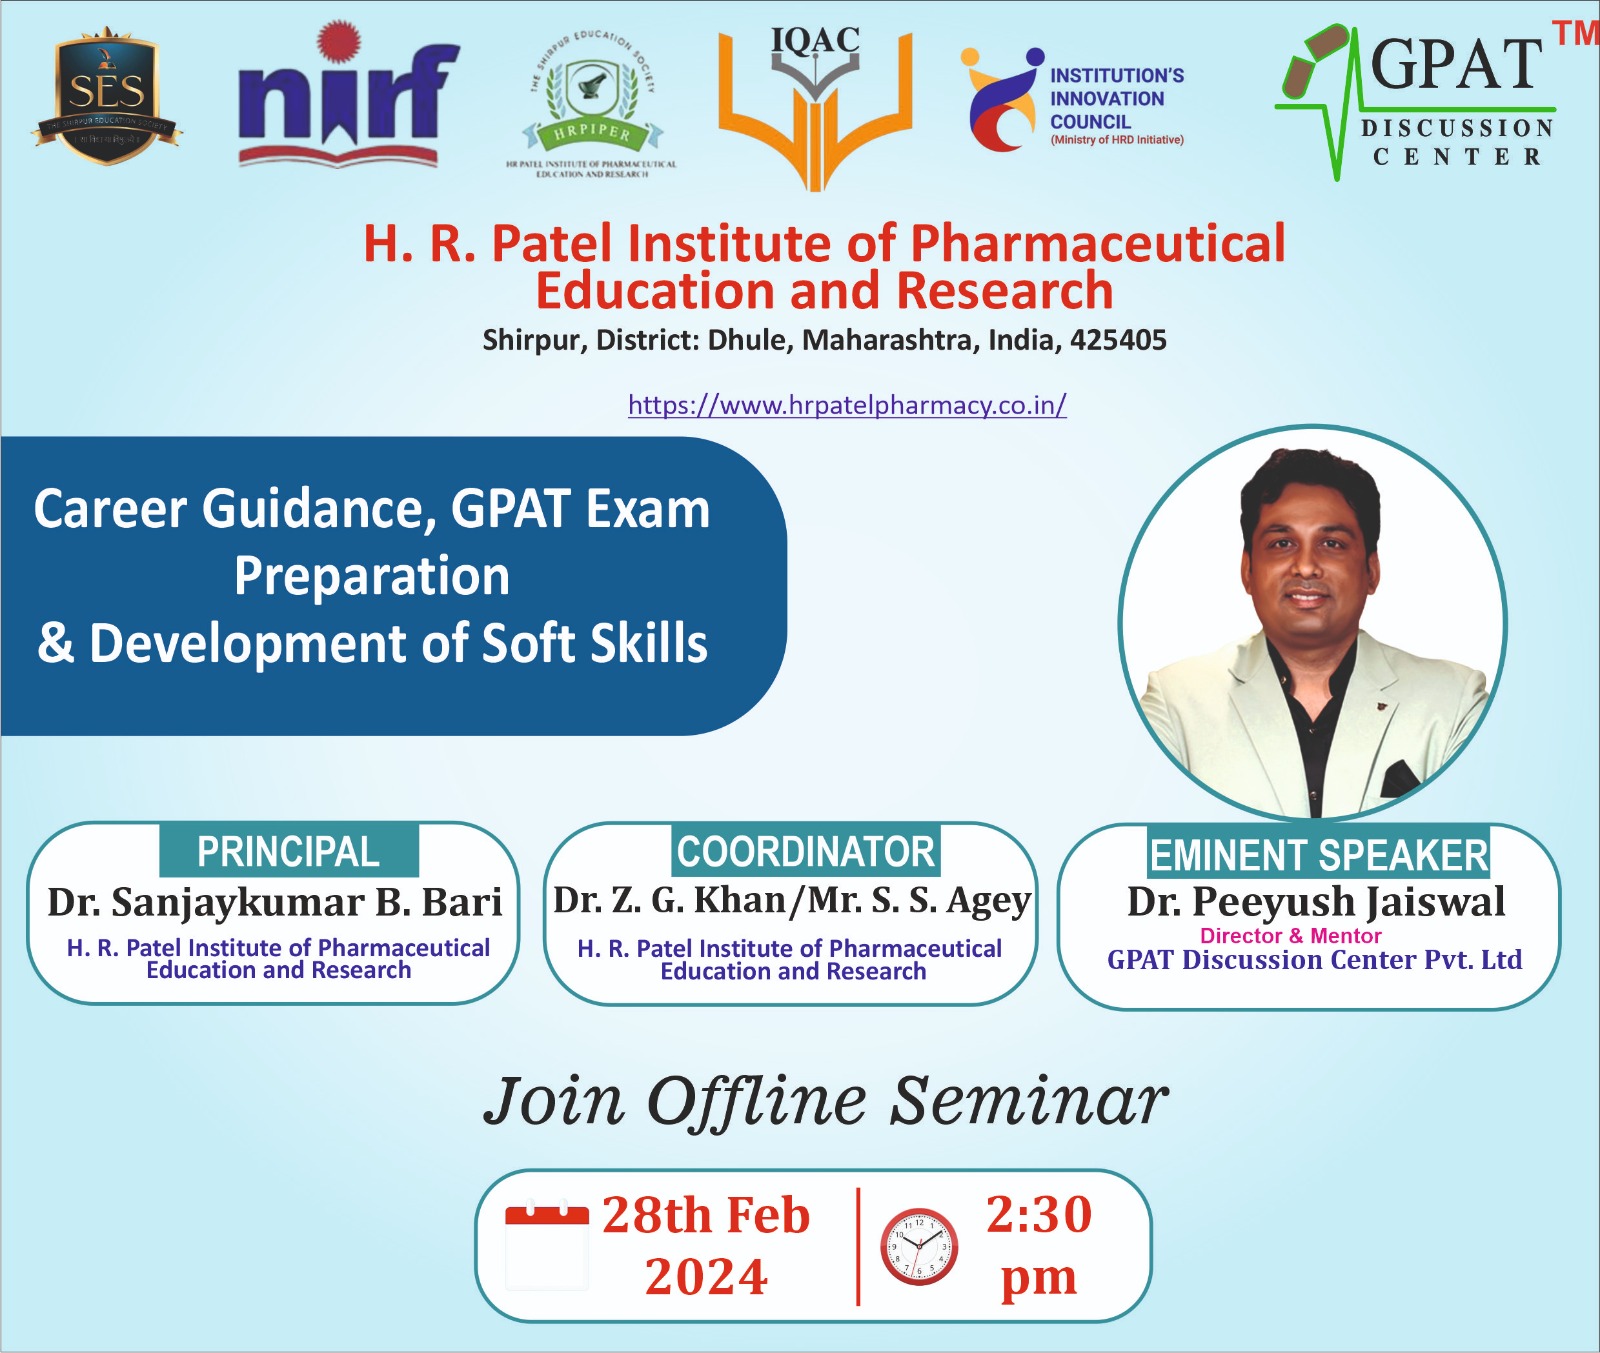 GPAT Guidance lecture by Dr. Peeyush Jaiswal